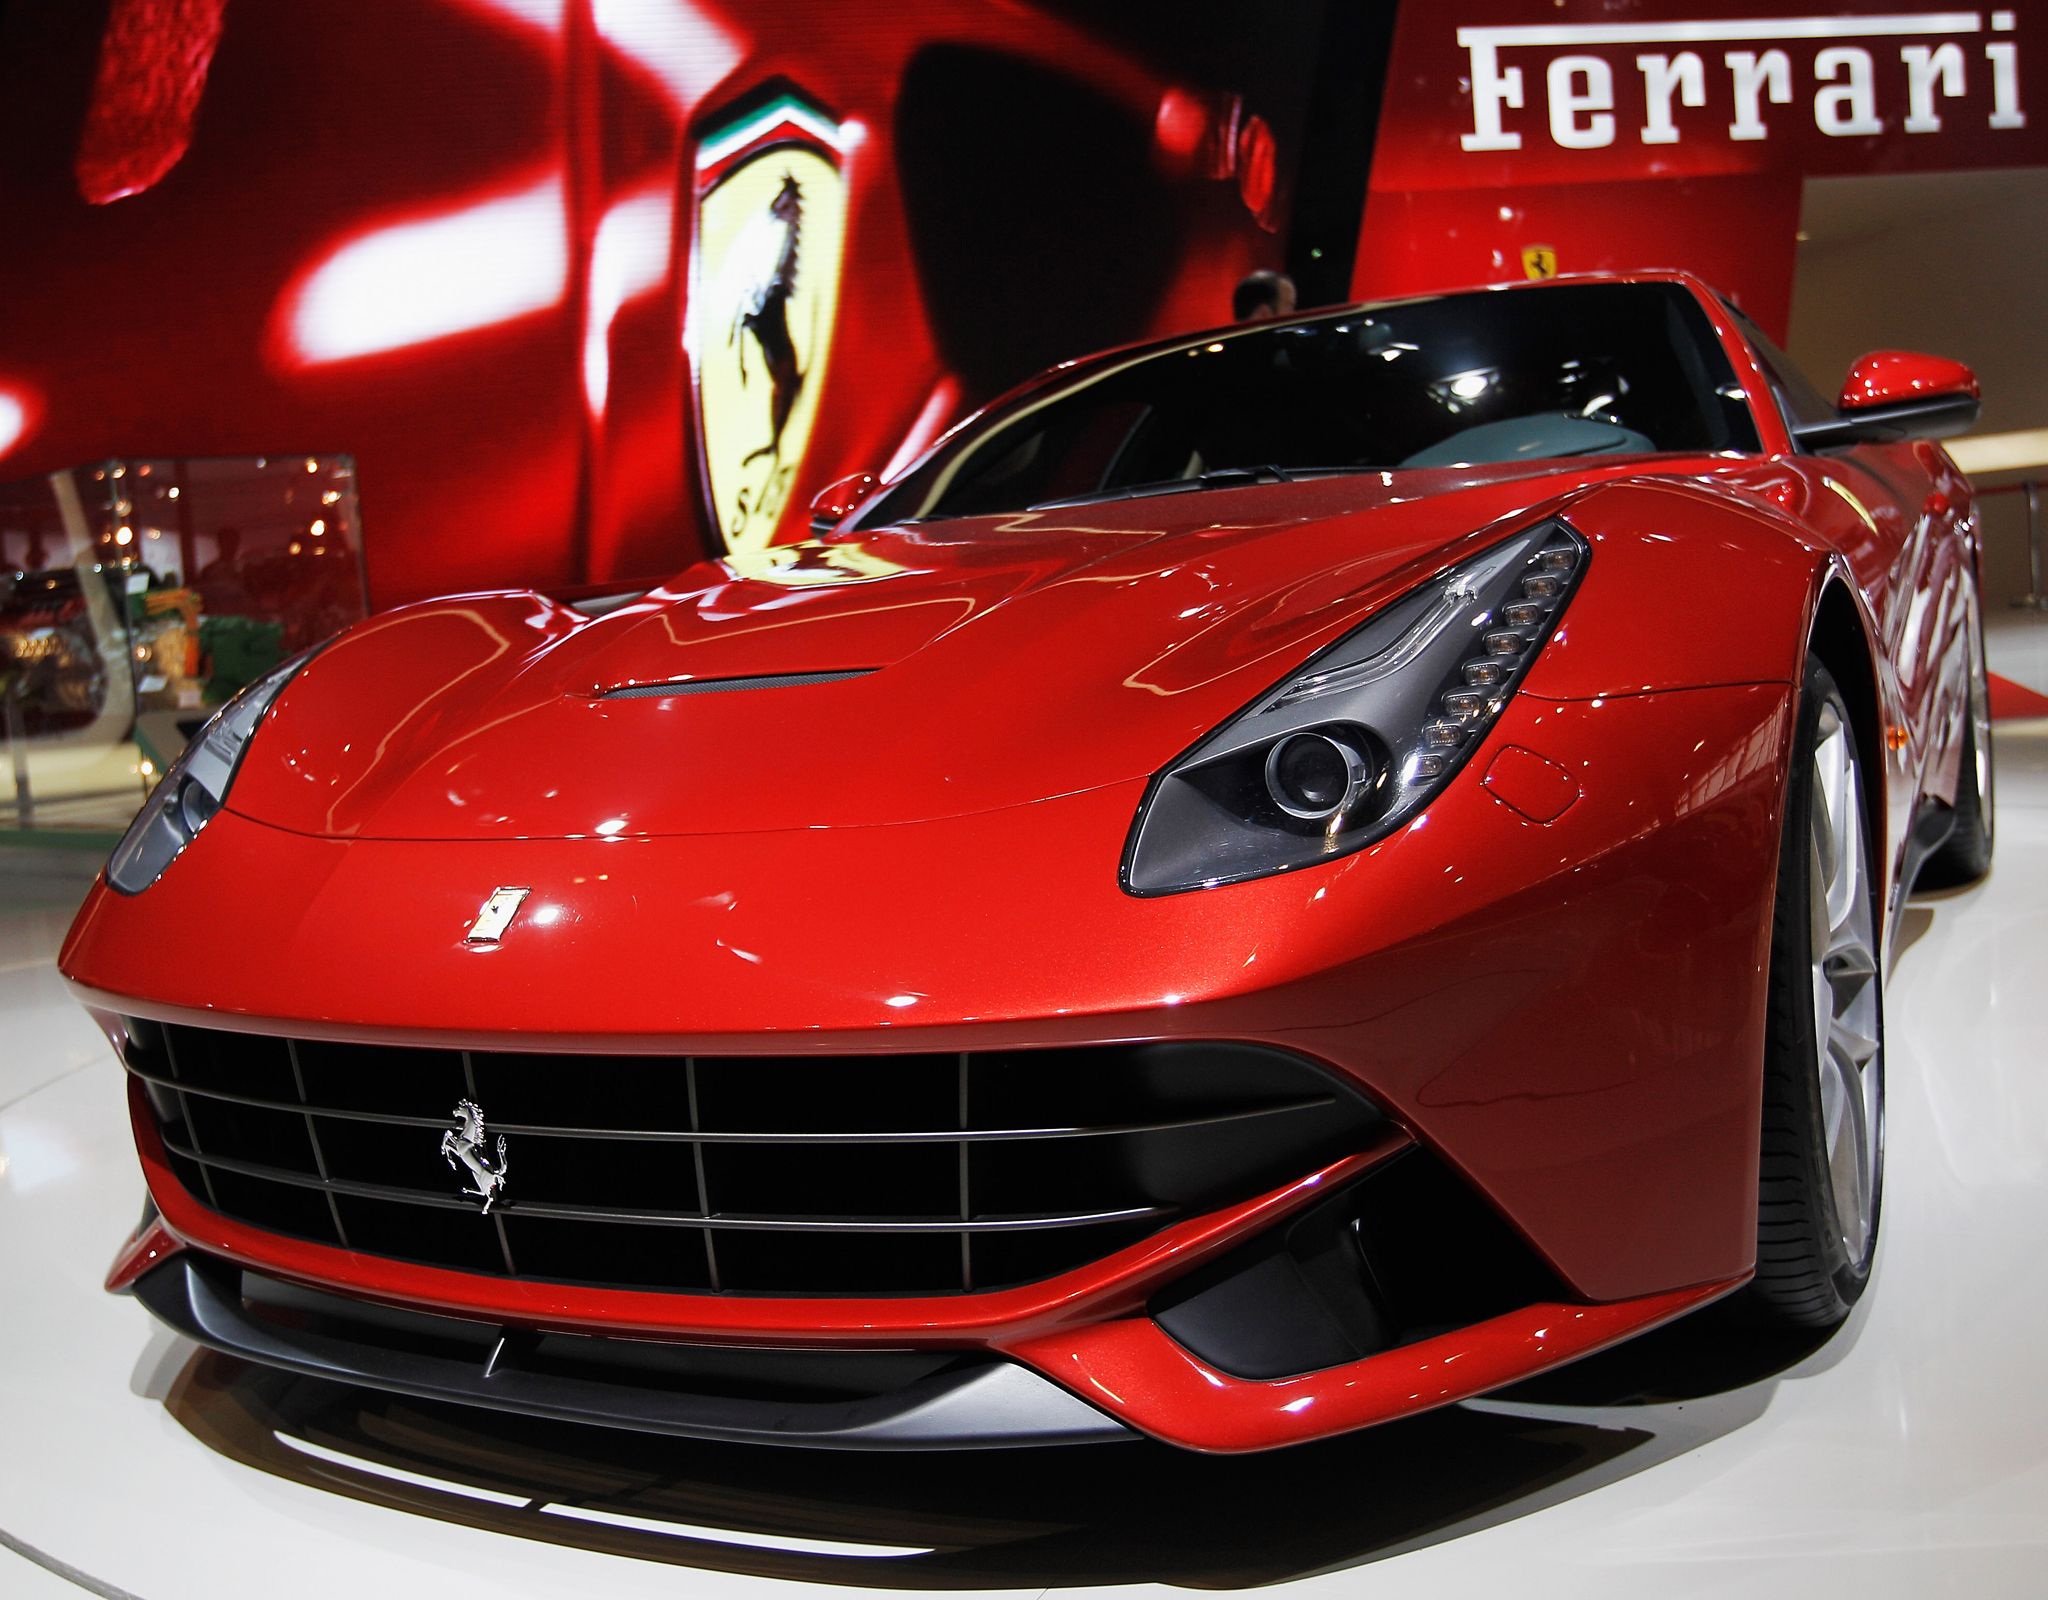 Ferrari F12 Berlinetta video pure car porn | Driving